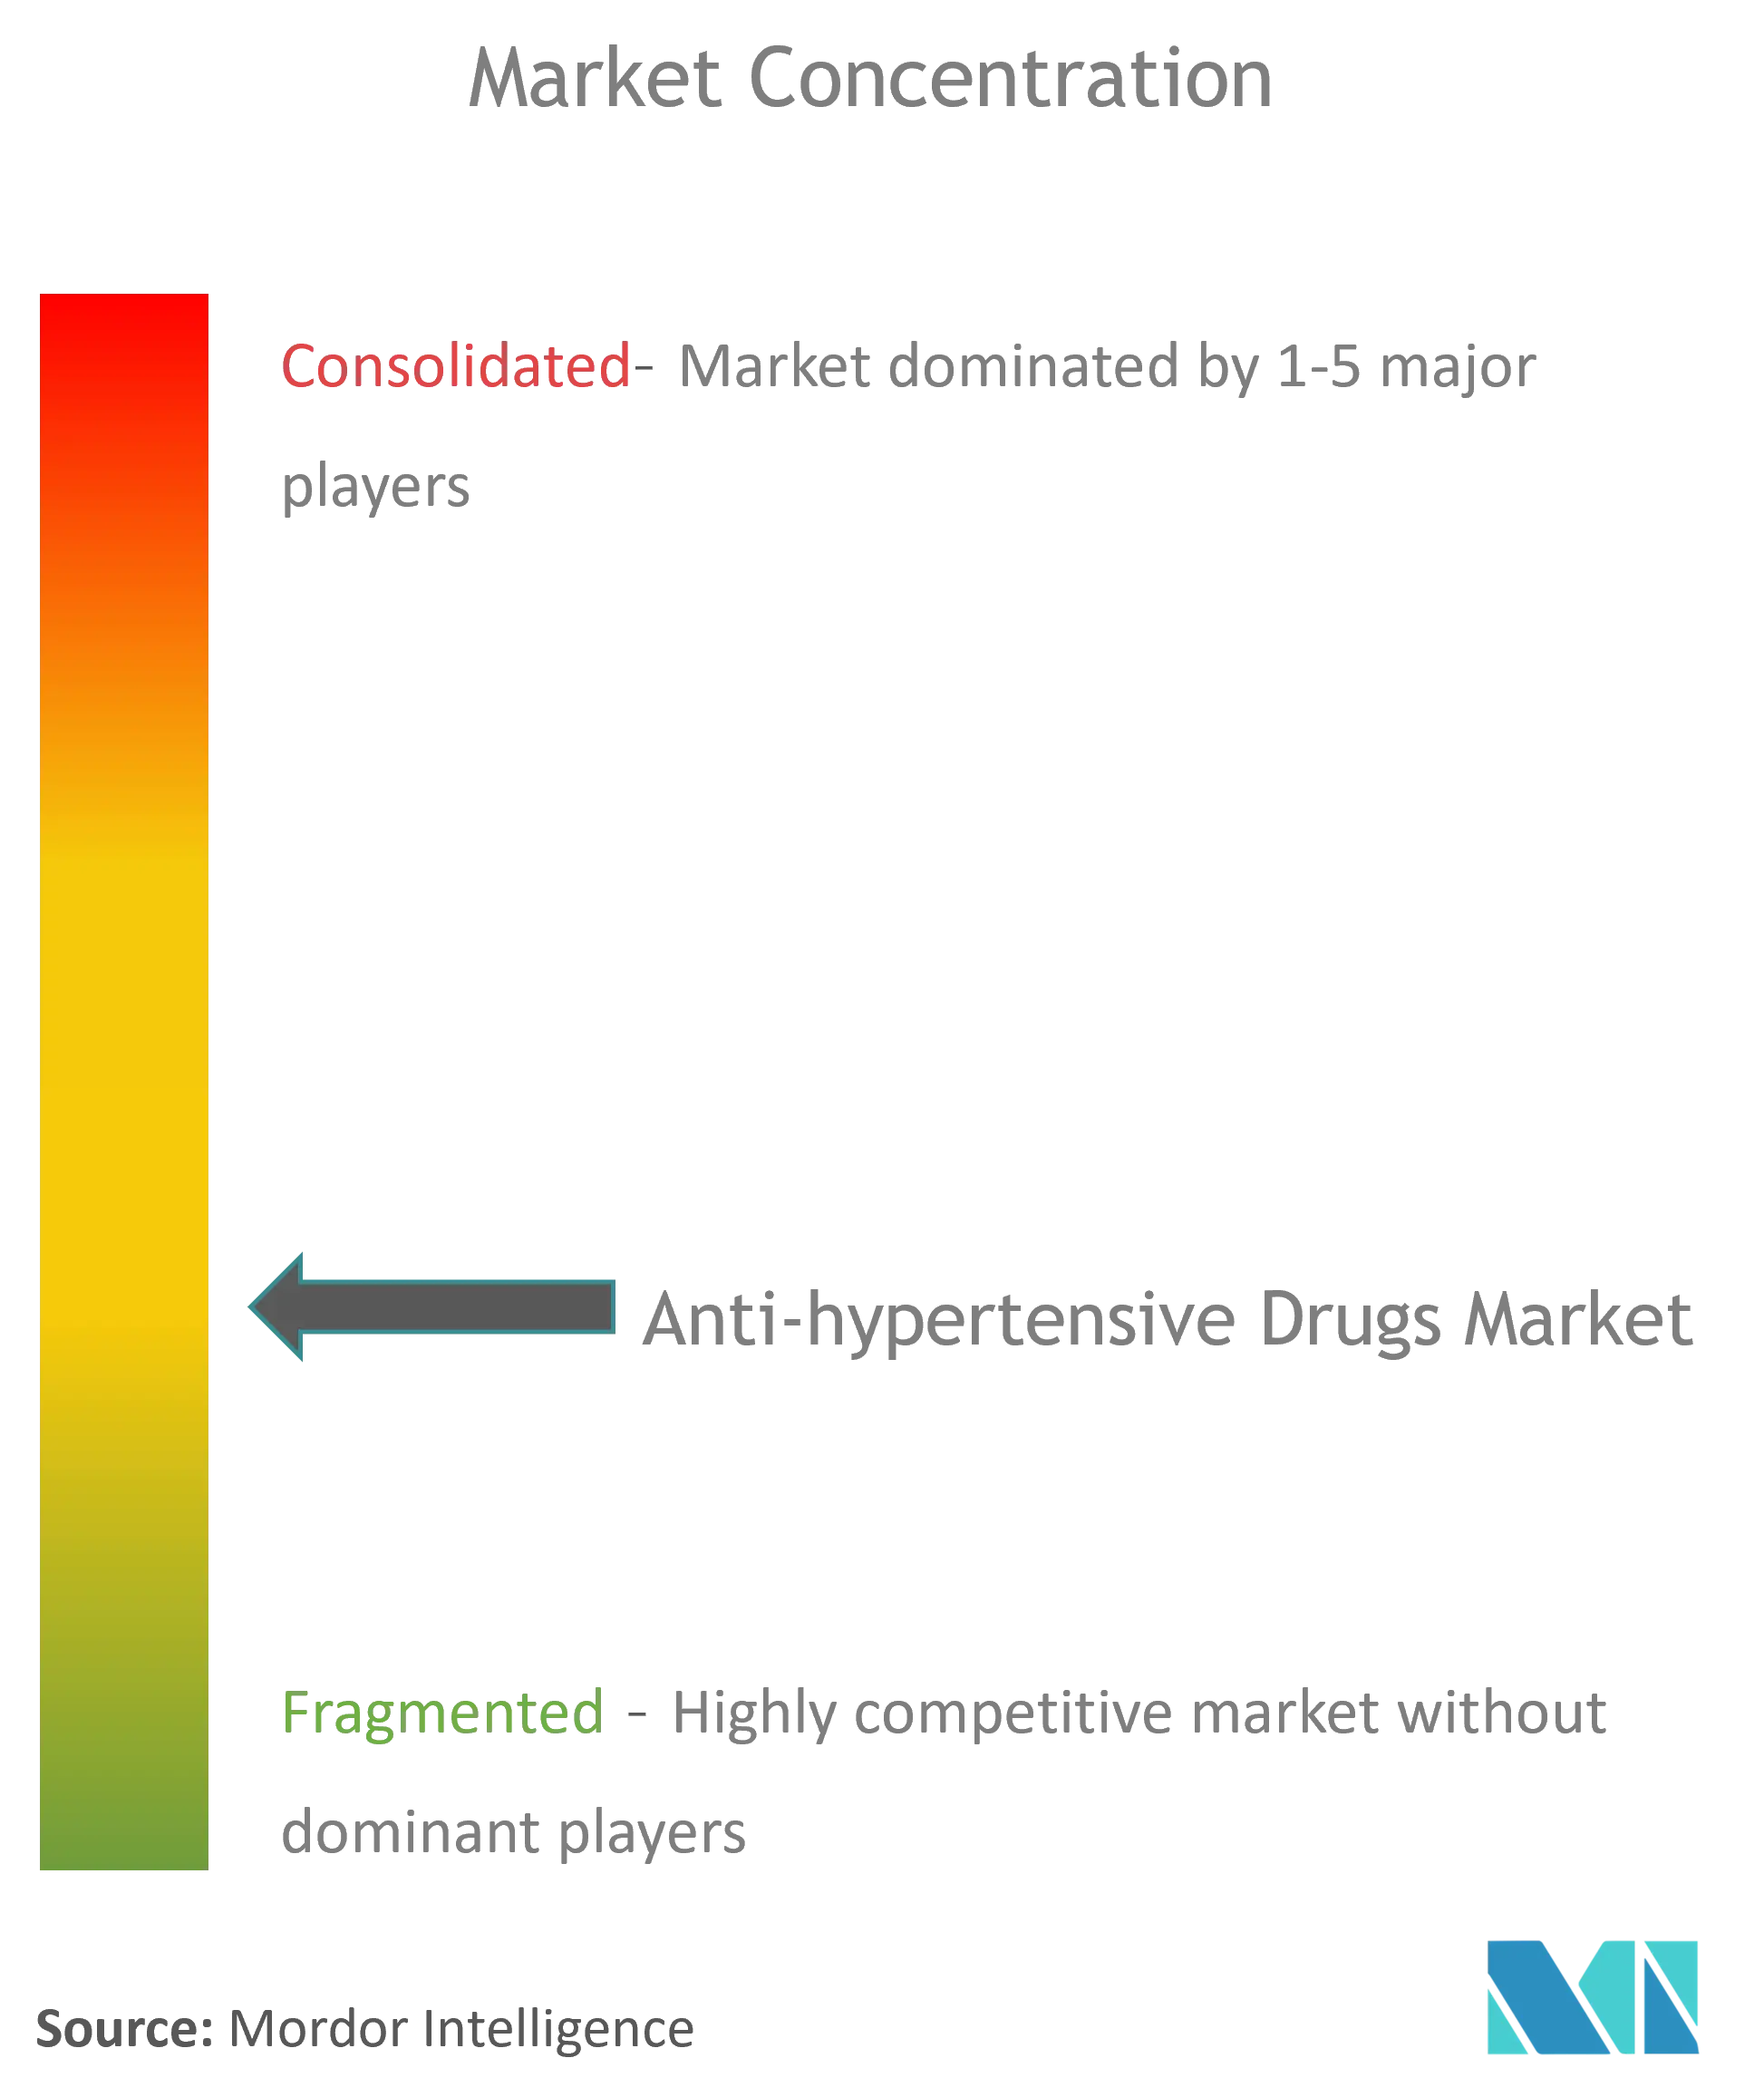 Anti-hypertensive Drugs market Concentration